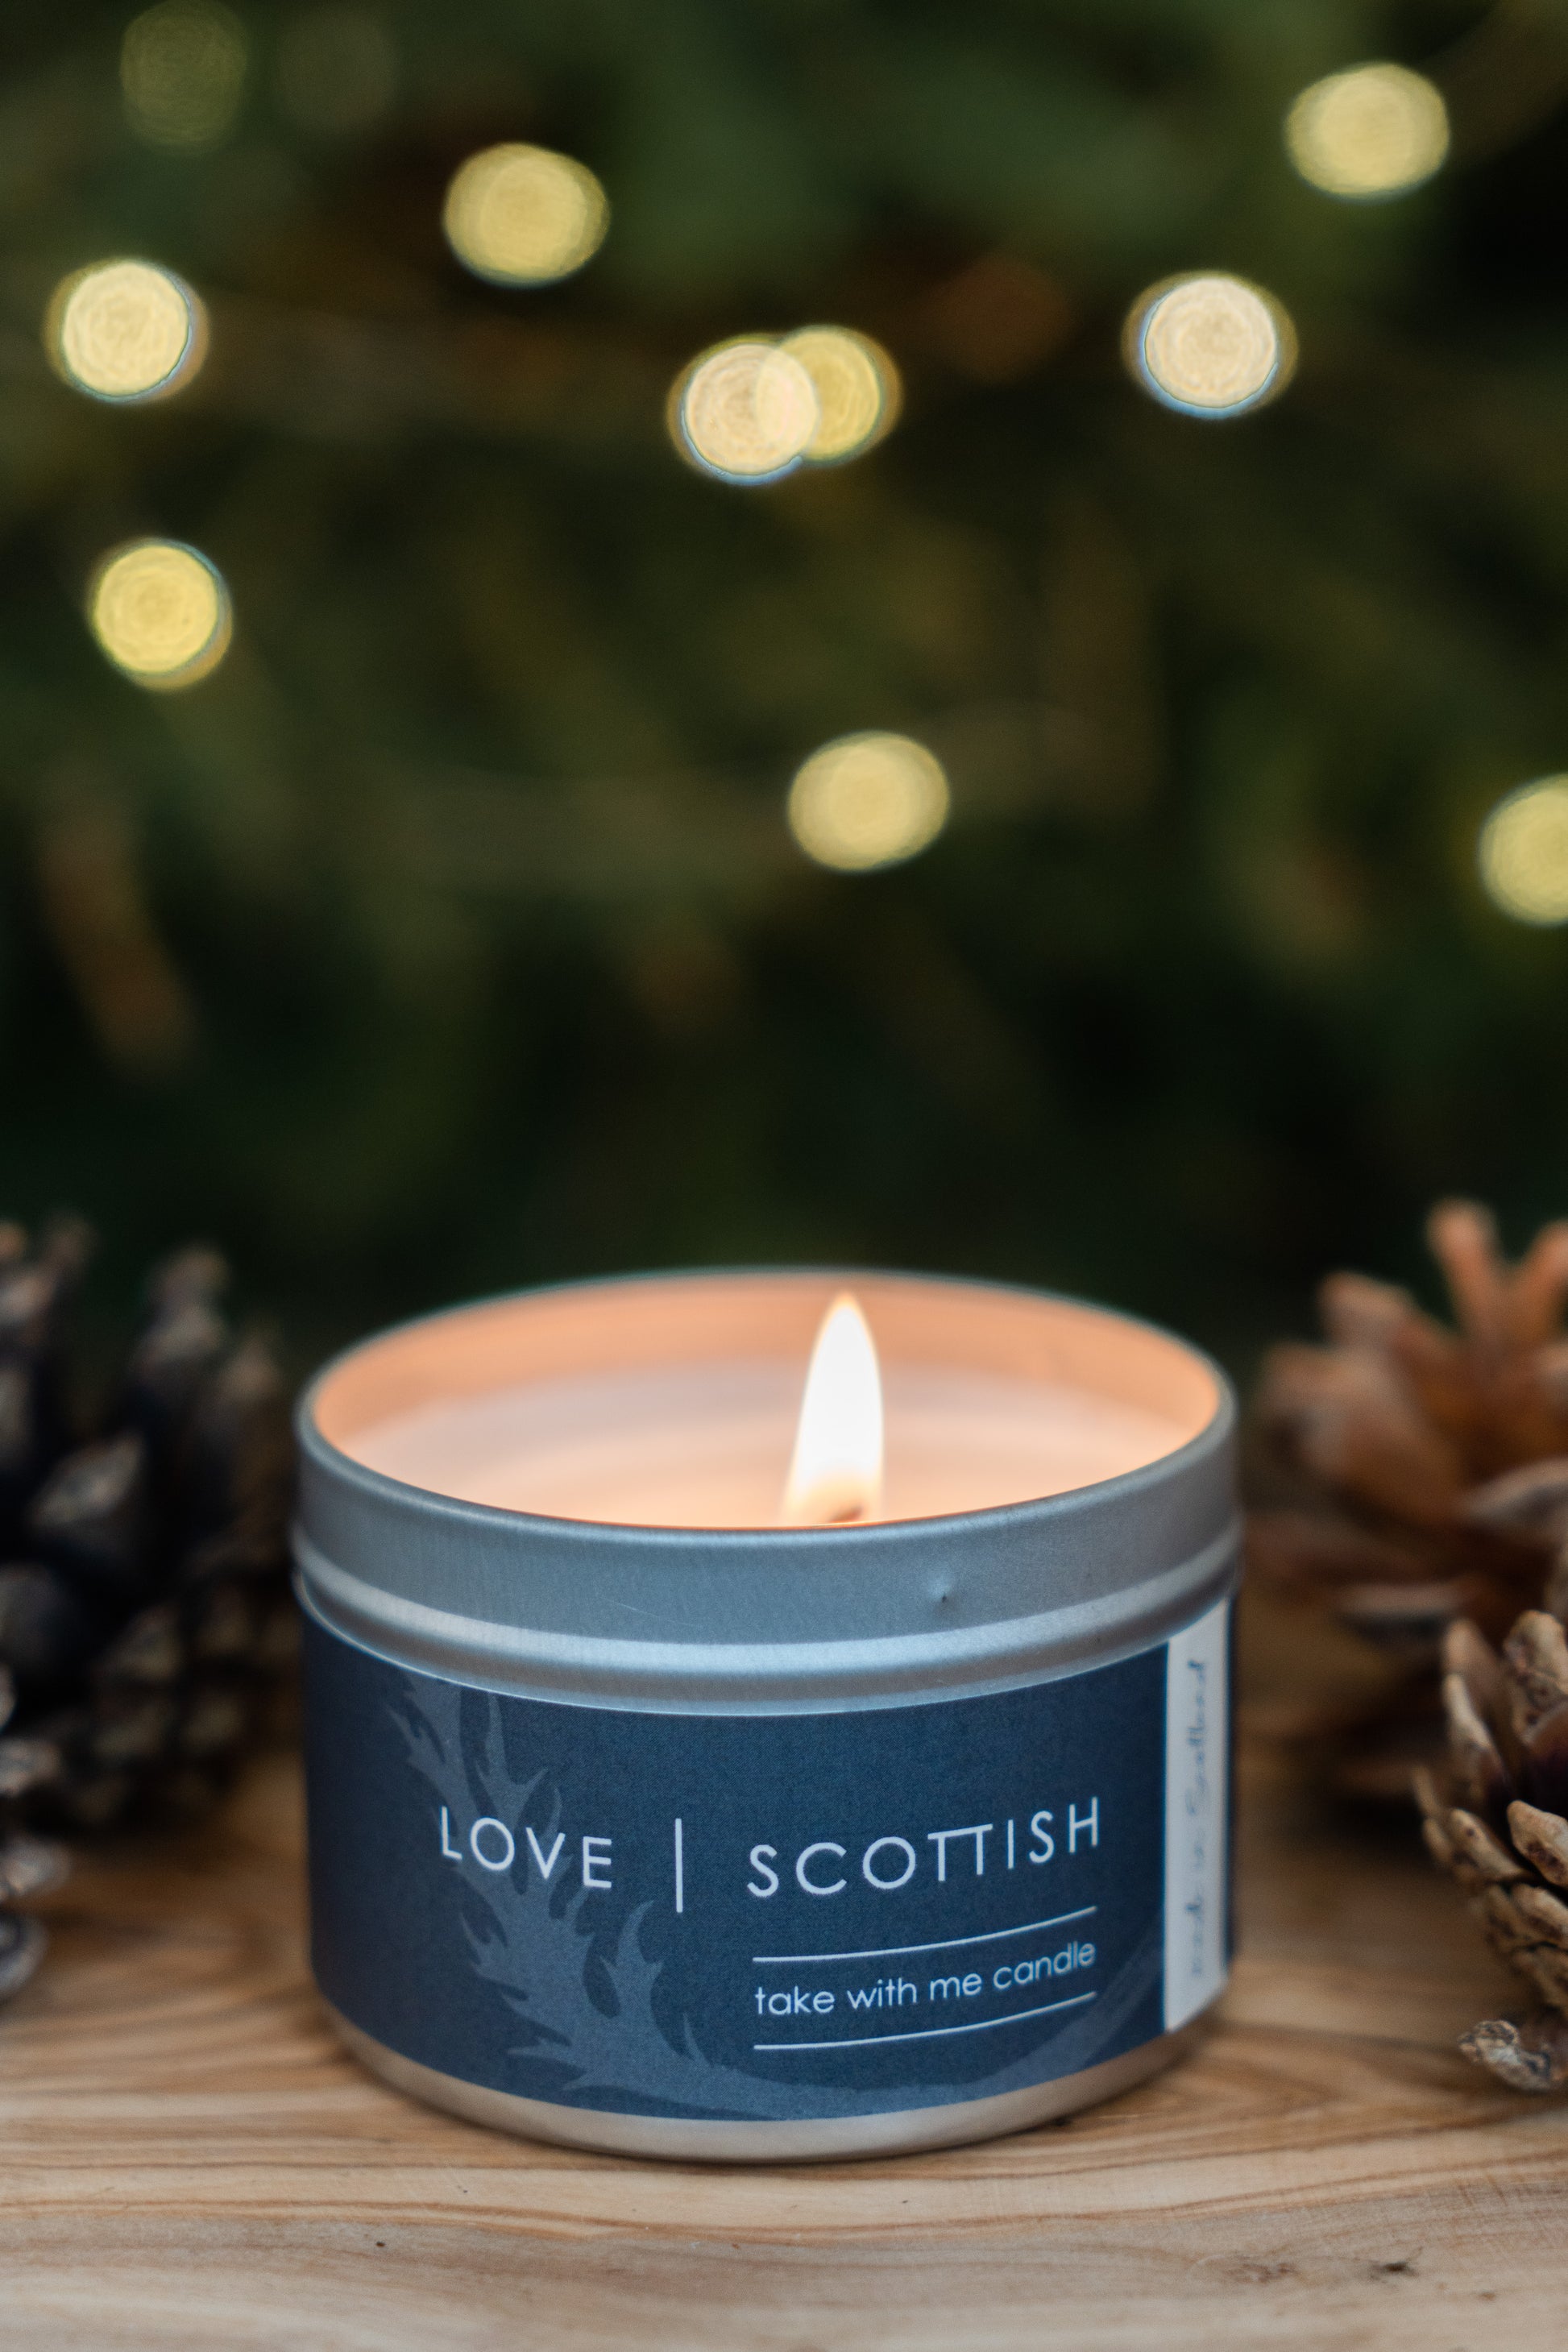 Love Scottish Snowy Nights Travel Tin. Made in Scotland.